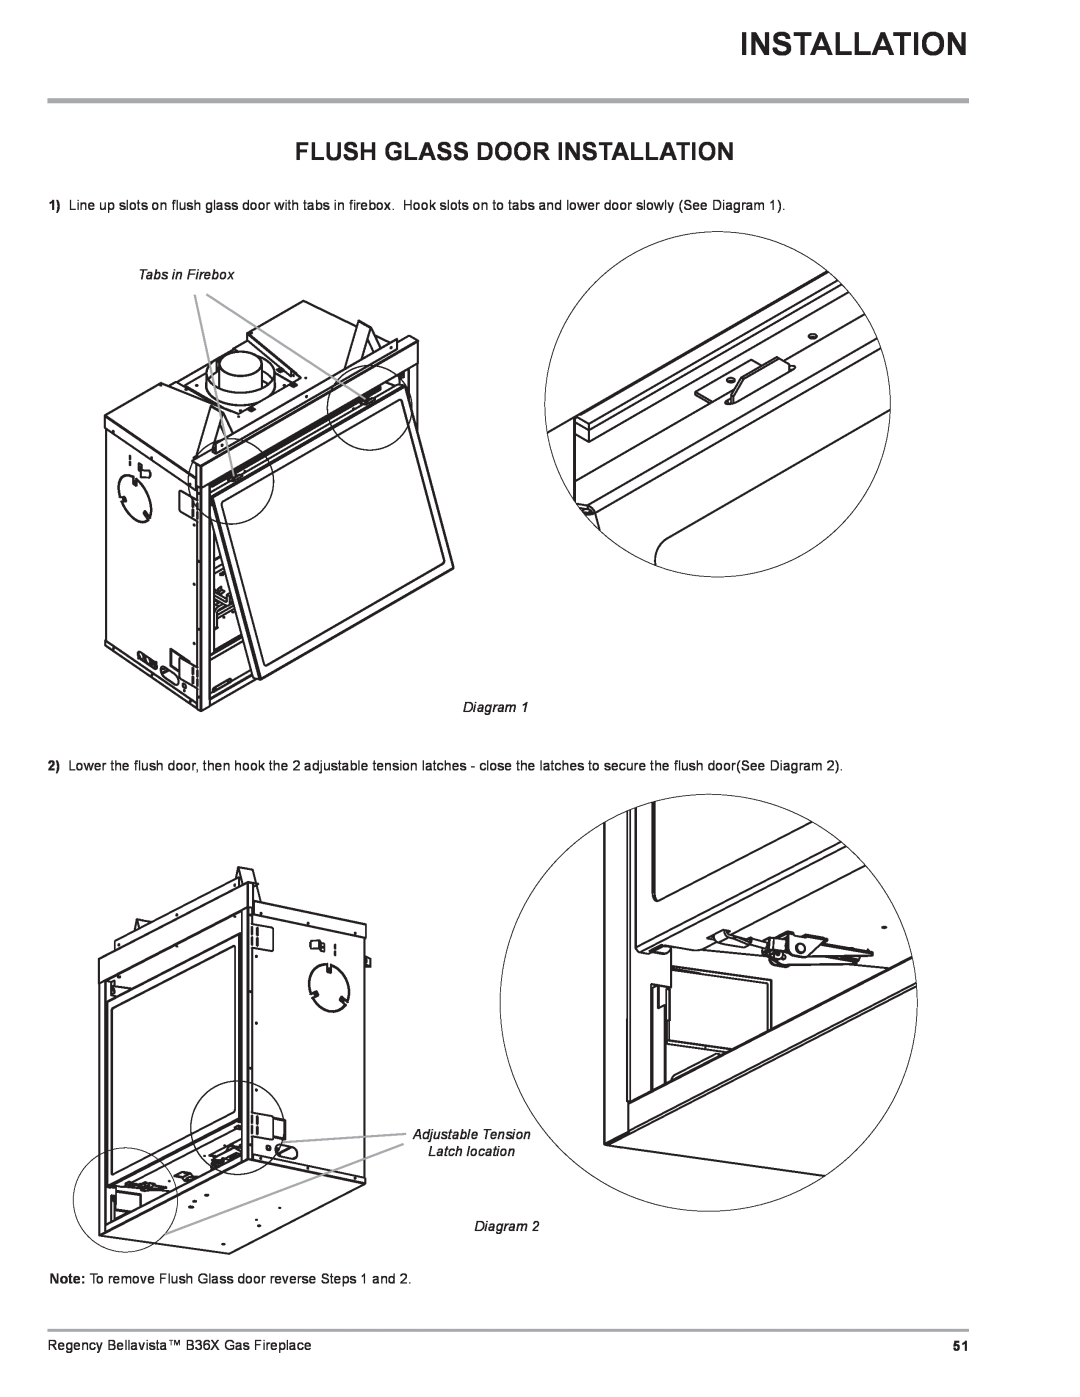 Regency B36X Flush Glass Door Installation, Tabs in Firebox Diagram, Adjustable Tension Latch location Diagram 